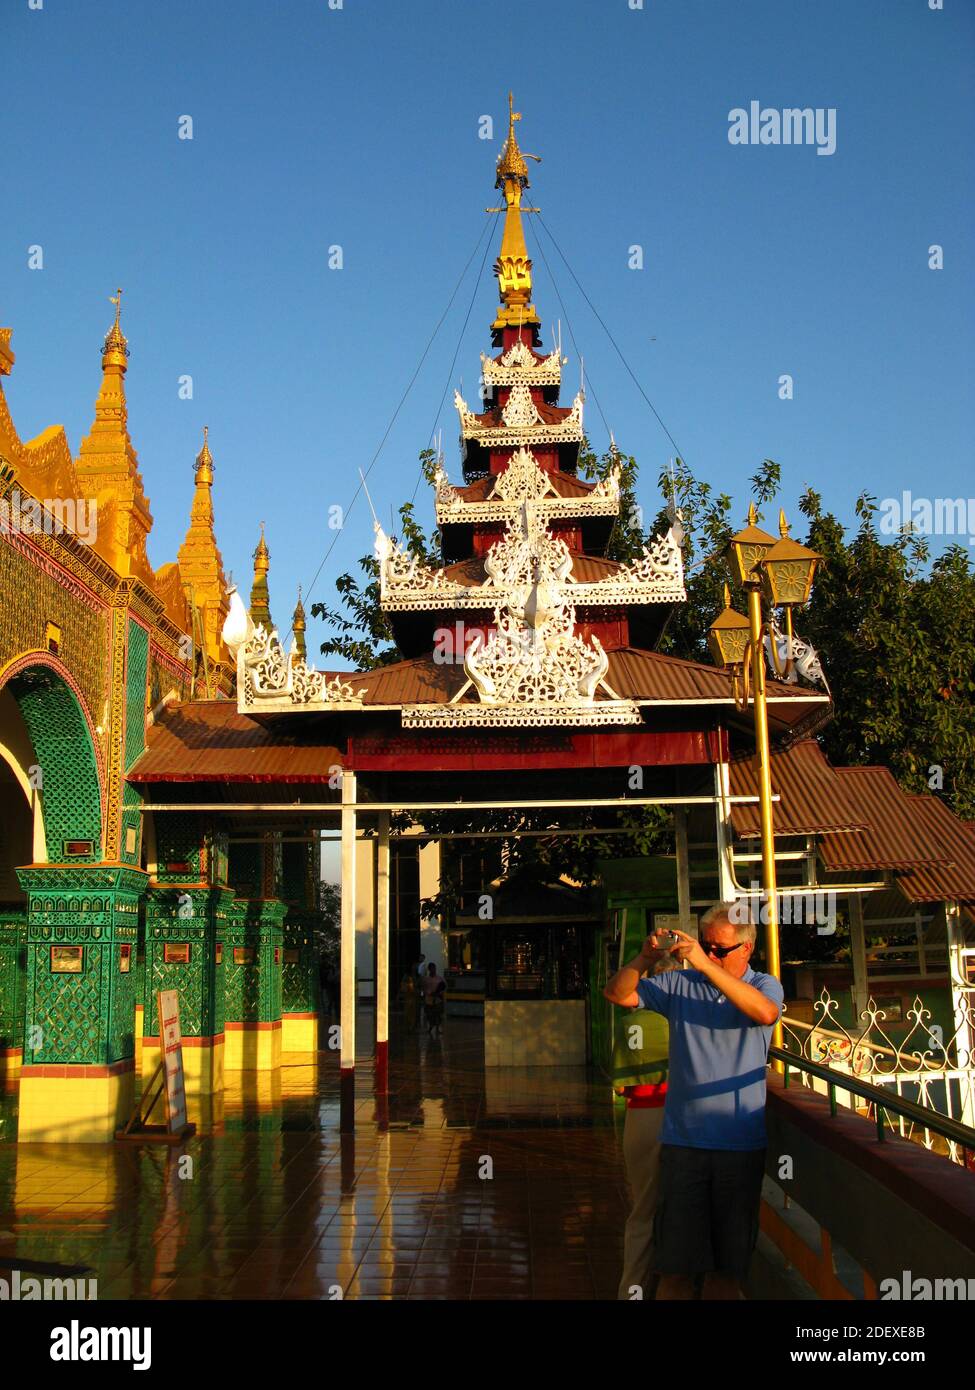 Su Taung Pyi Pagoda, Mandalay, Myanmar Foto de stock